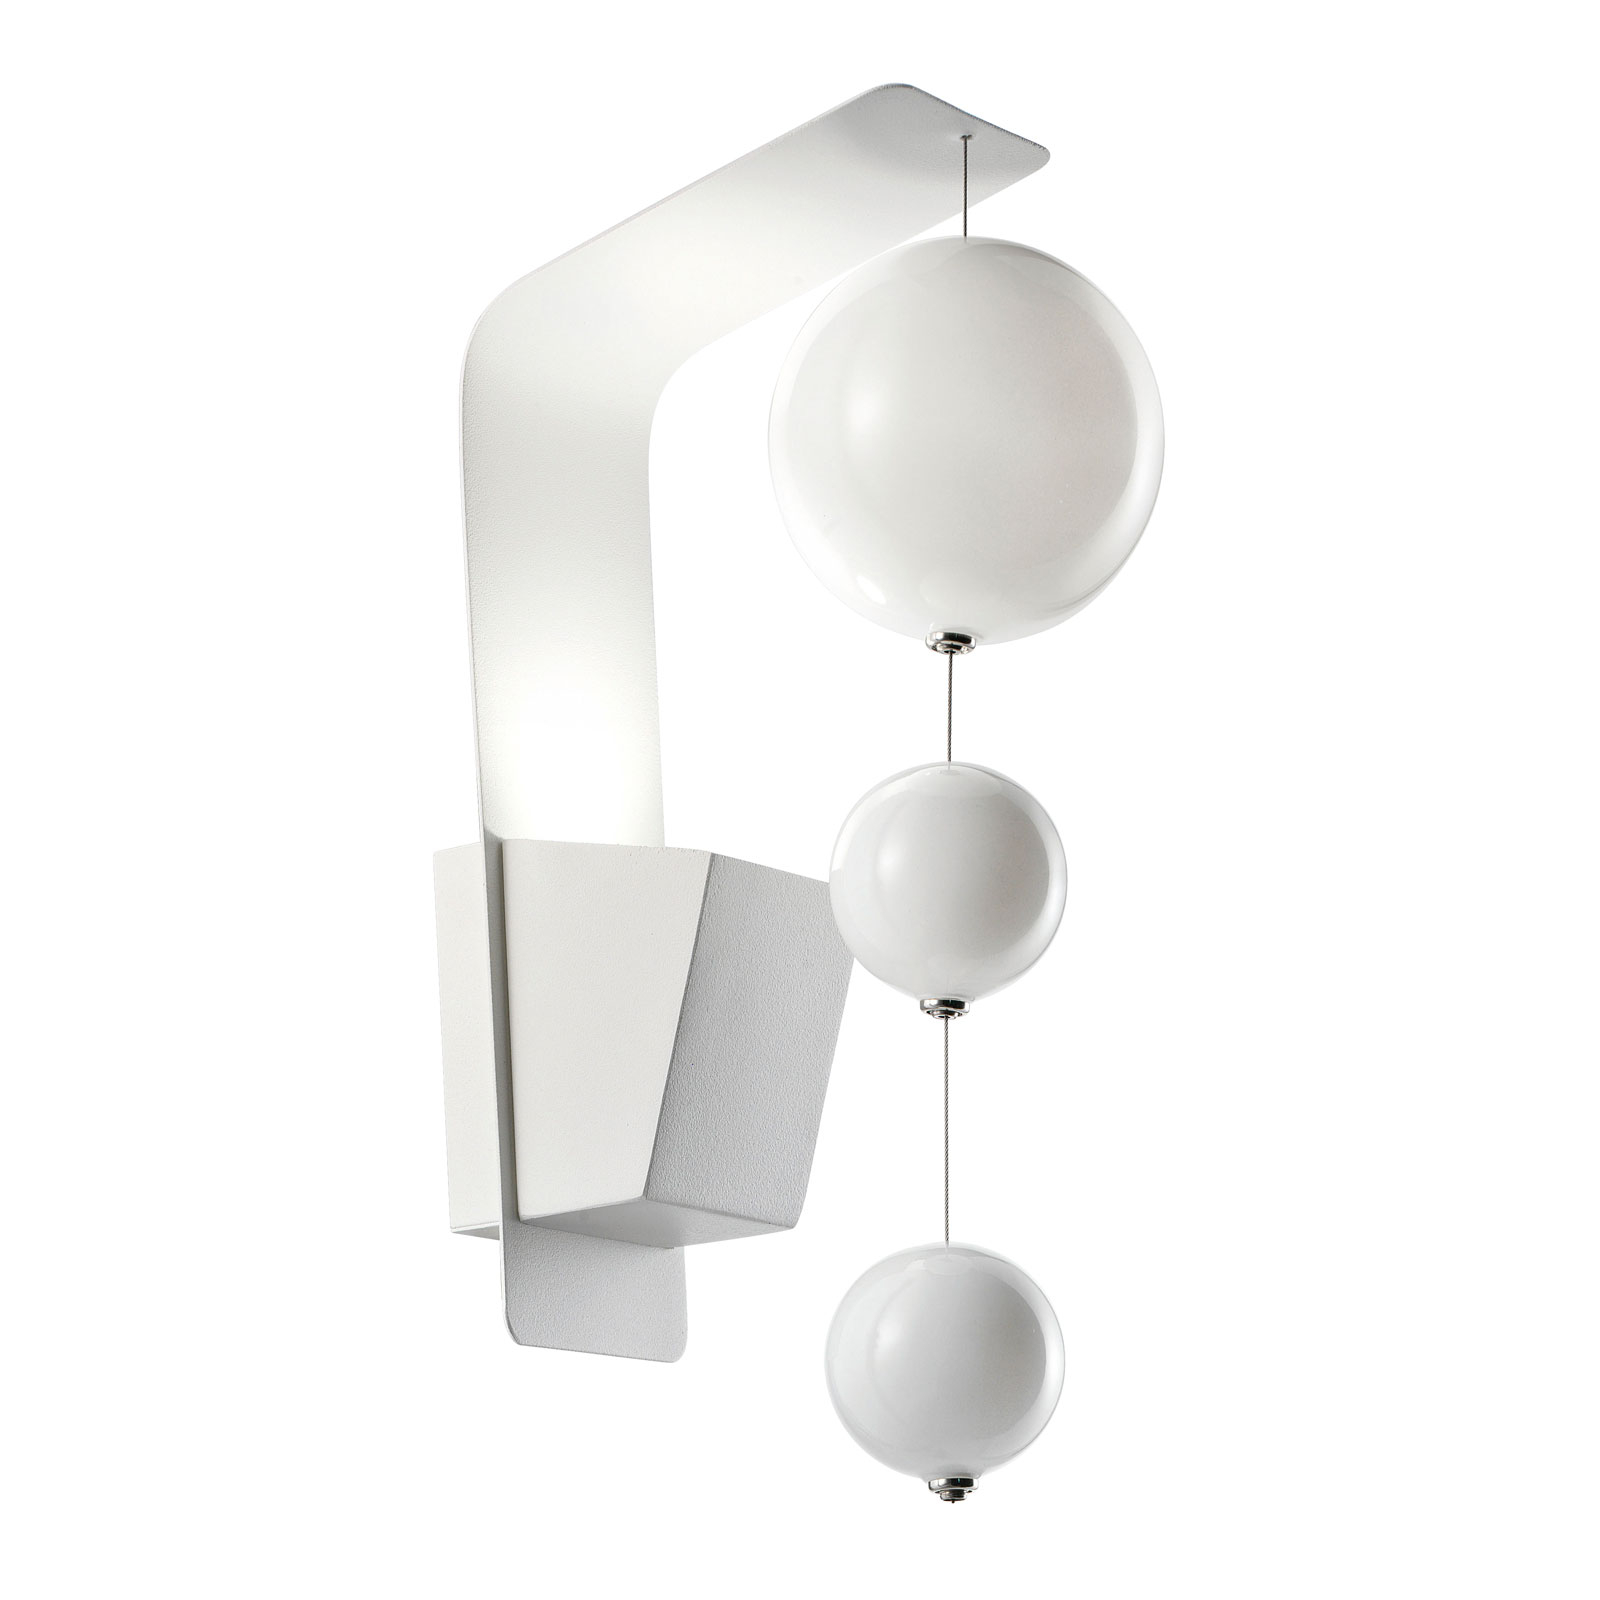 Bolero wall light, white mount, white balls